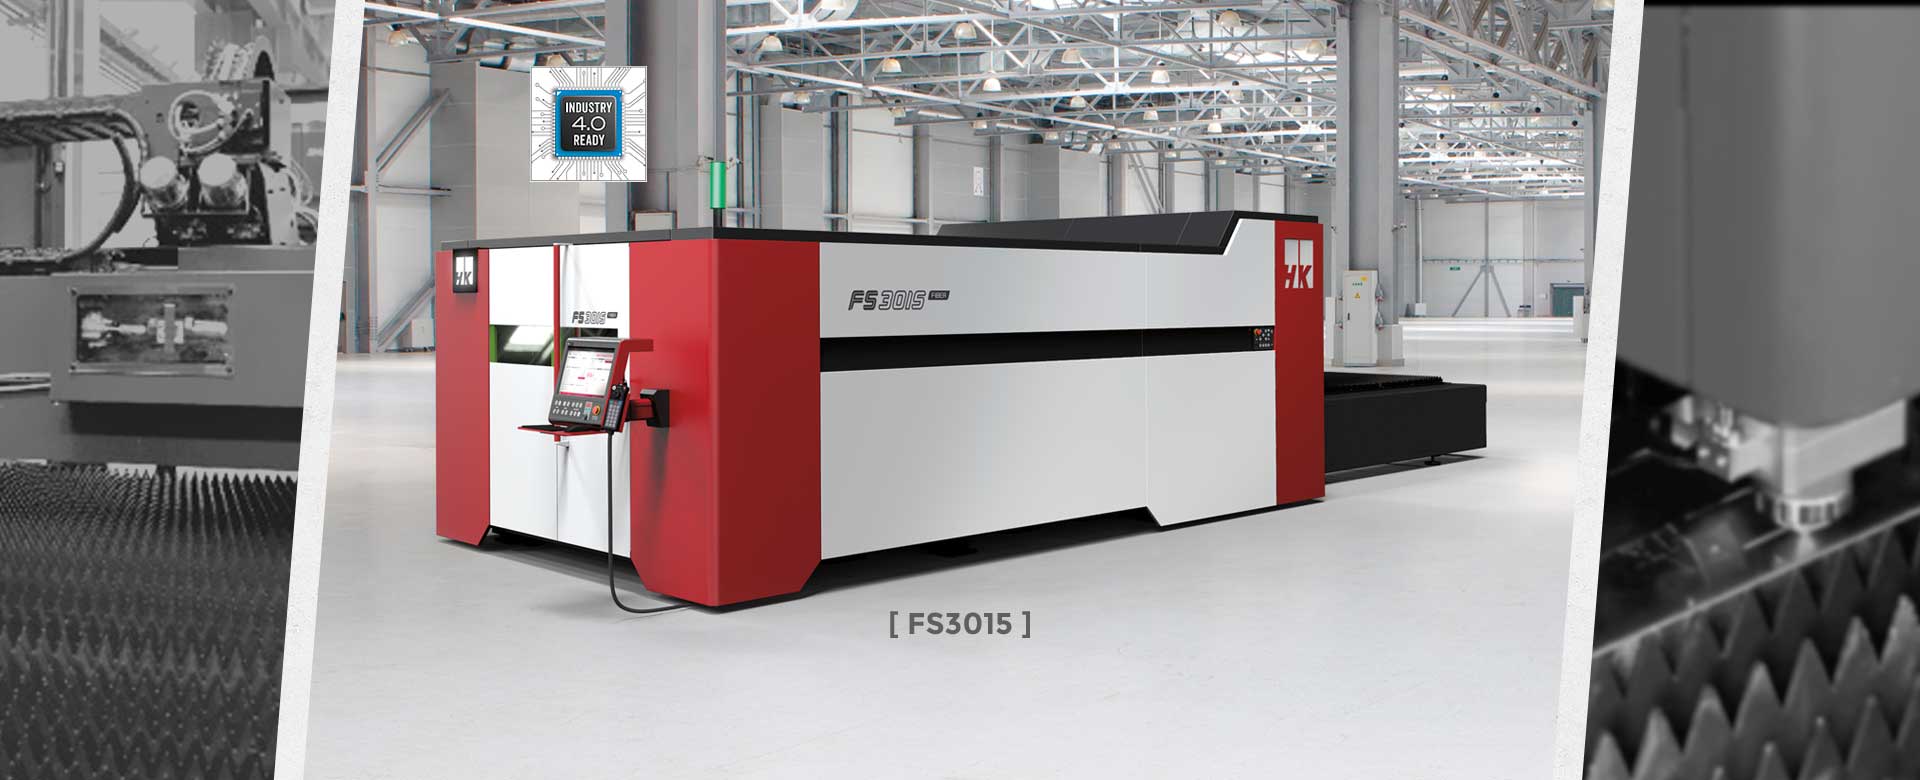 HK FS3015 Fiber Laser Cutting System